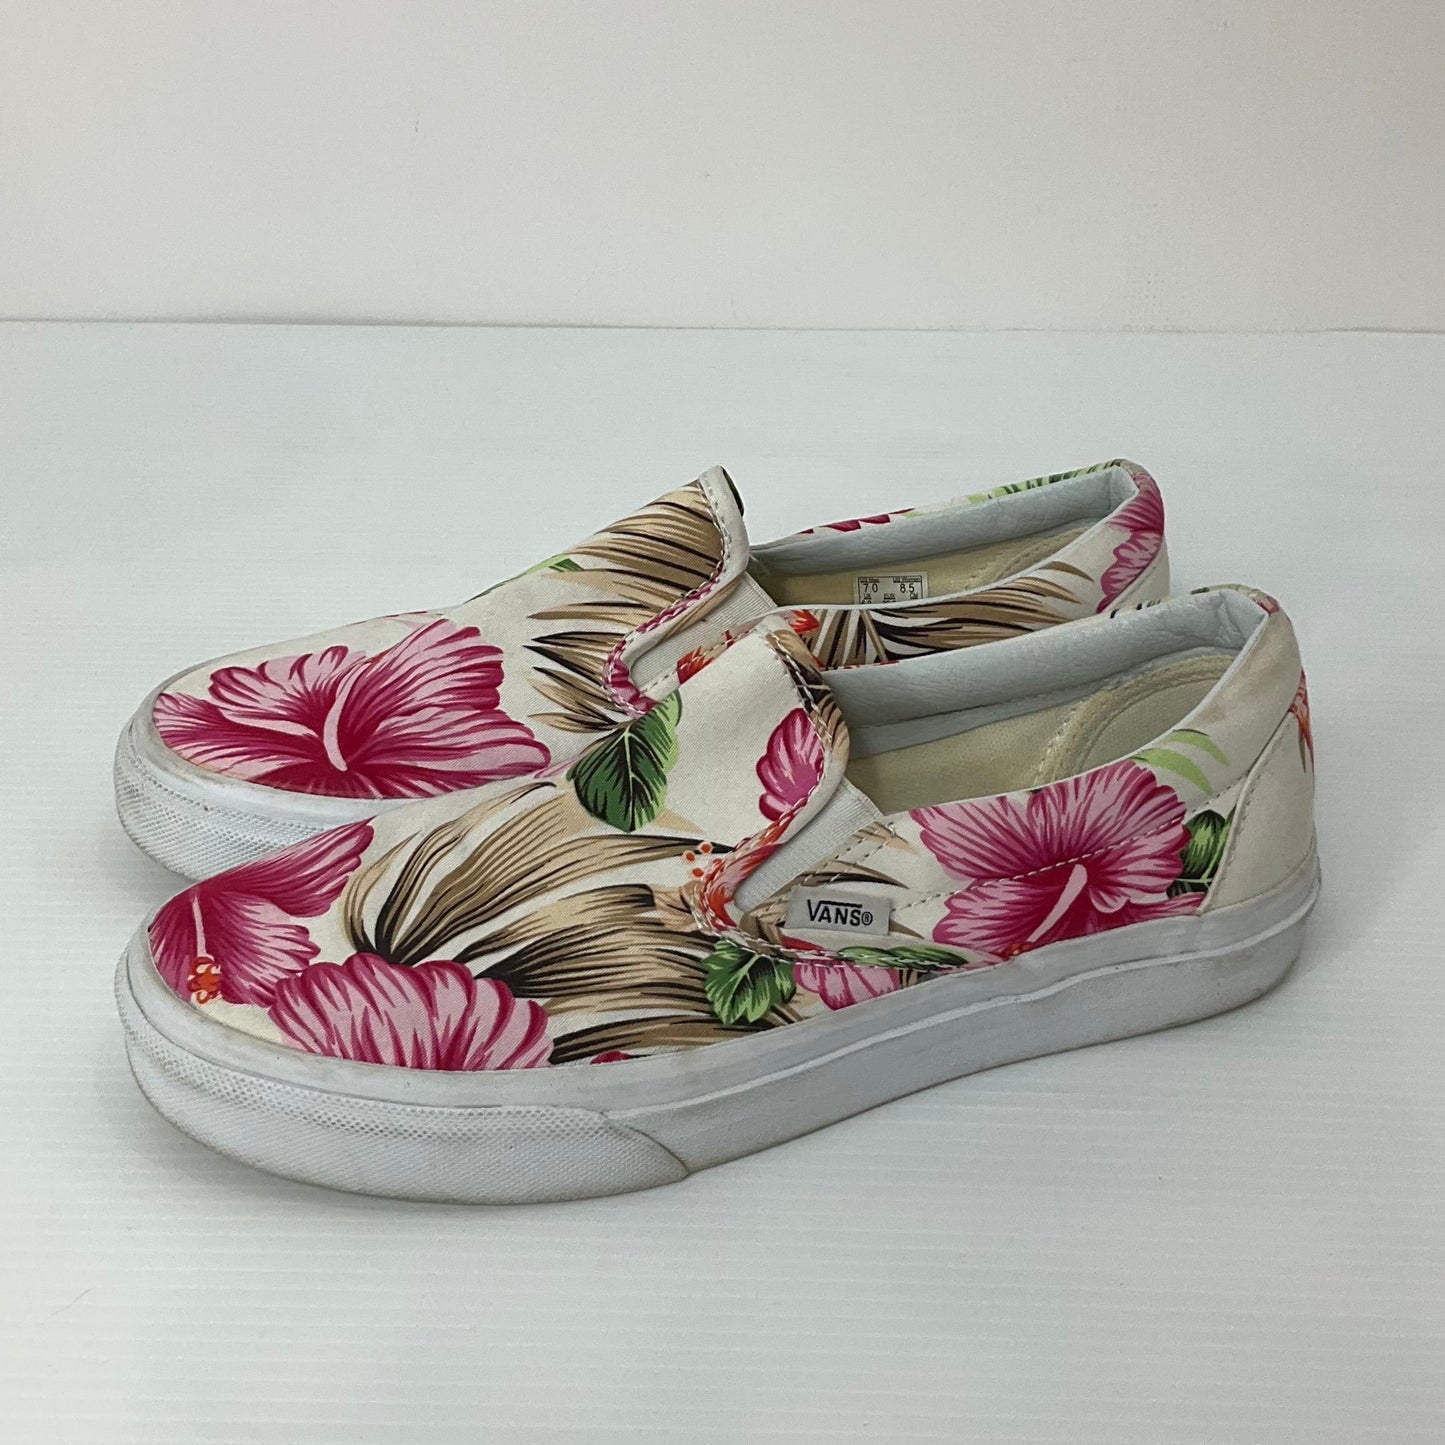 Tropical Print Shoes Sneakers Vans, Size 8.5